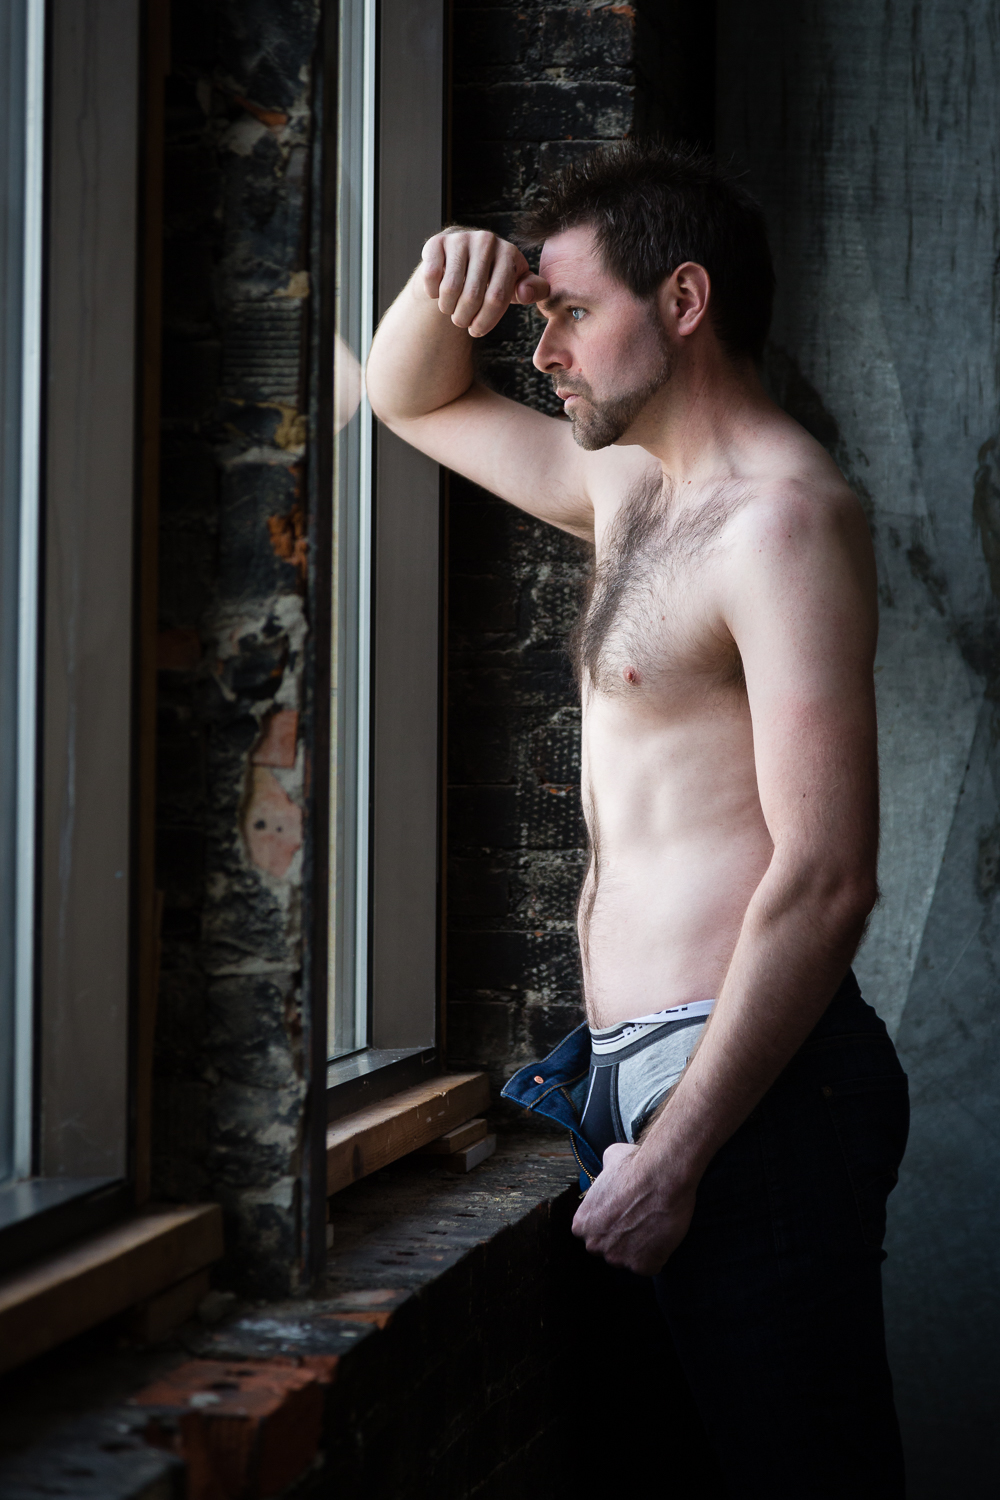 montana-male-boudoir-photoshoot-shirtless-man-leans-arm-on-window.jpg